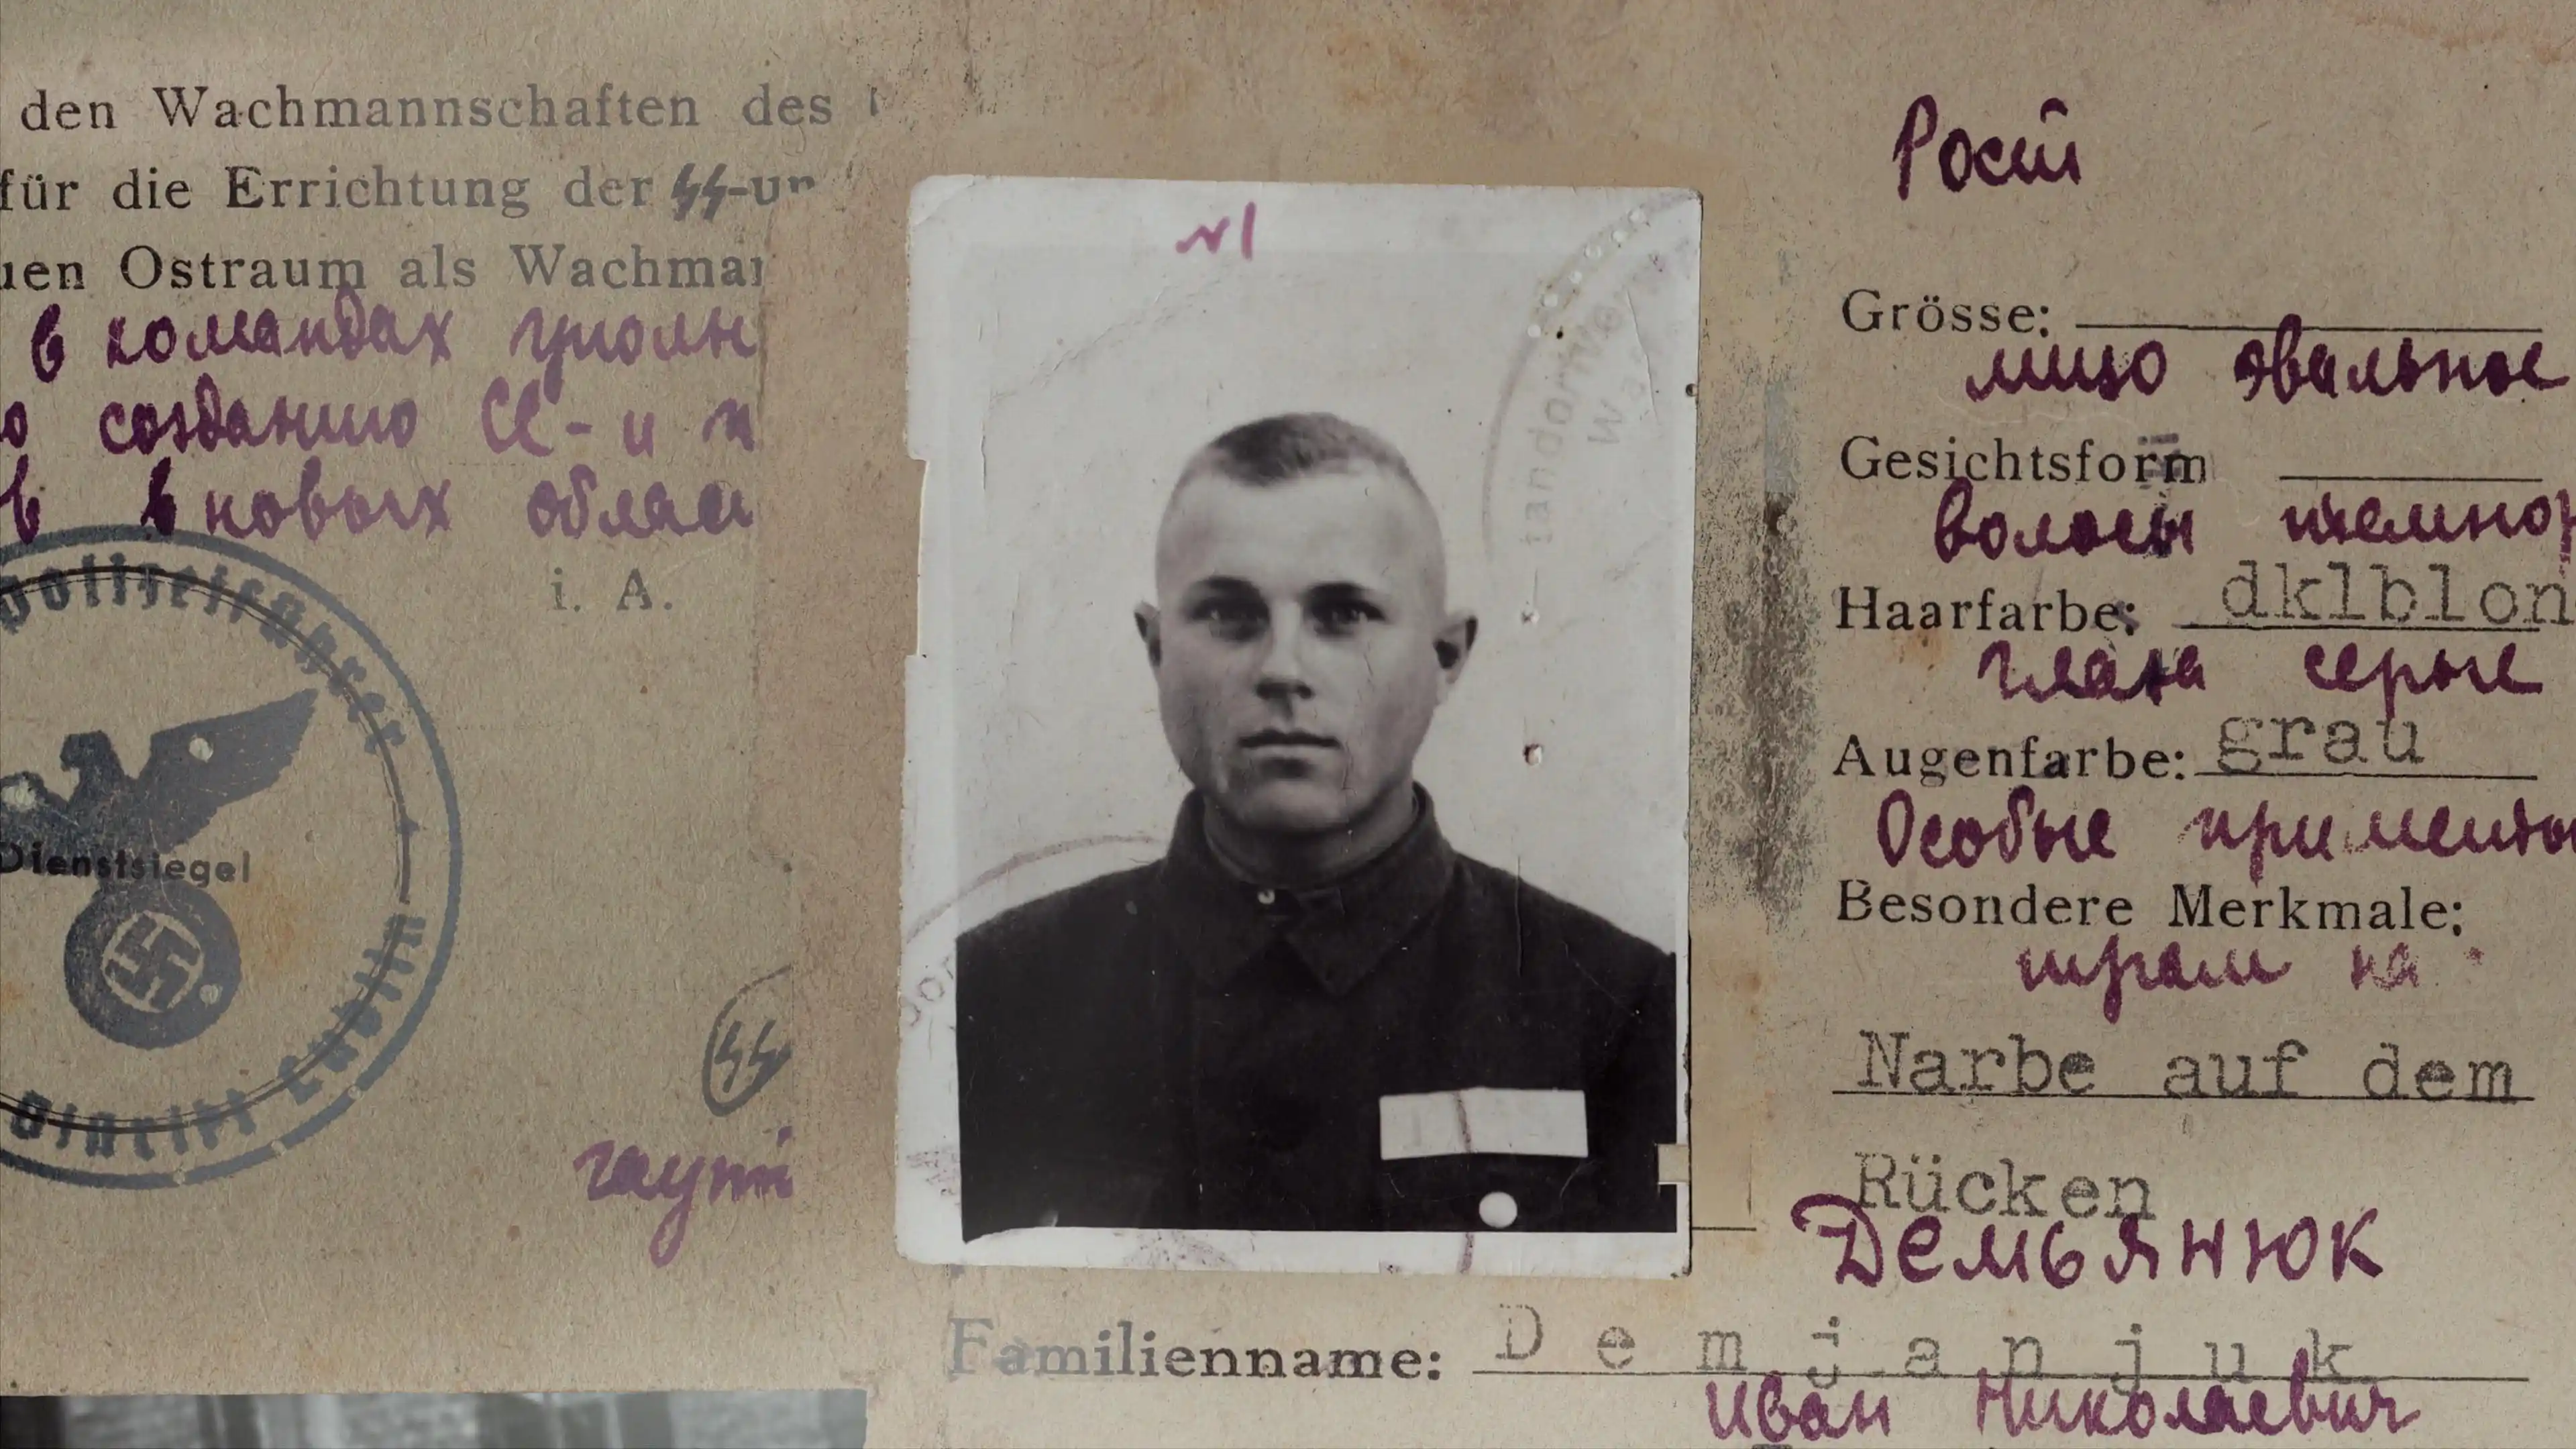 John Demjanjuk, pictured, for his Trawniki card in the documentary 'The Devil Next Door.'